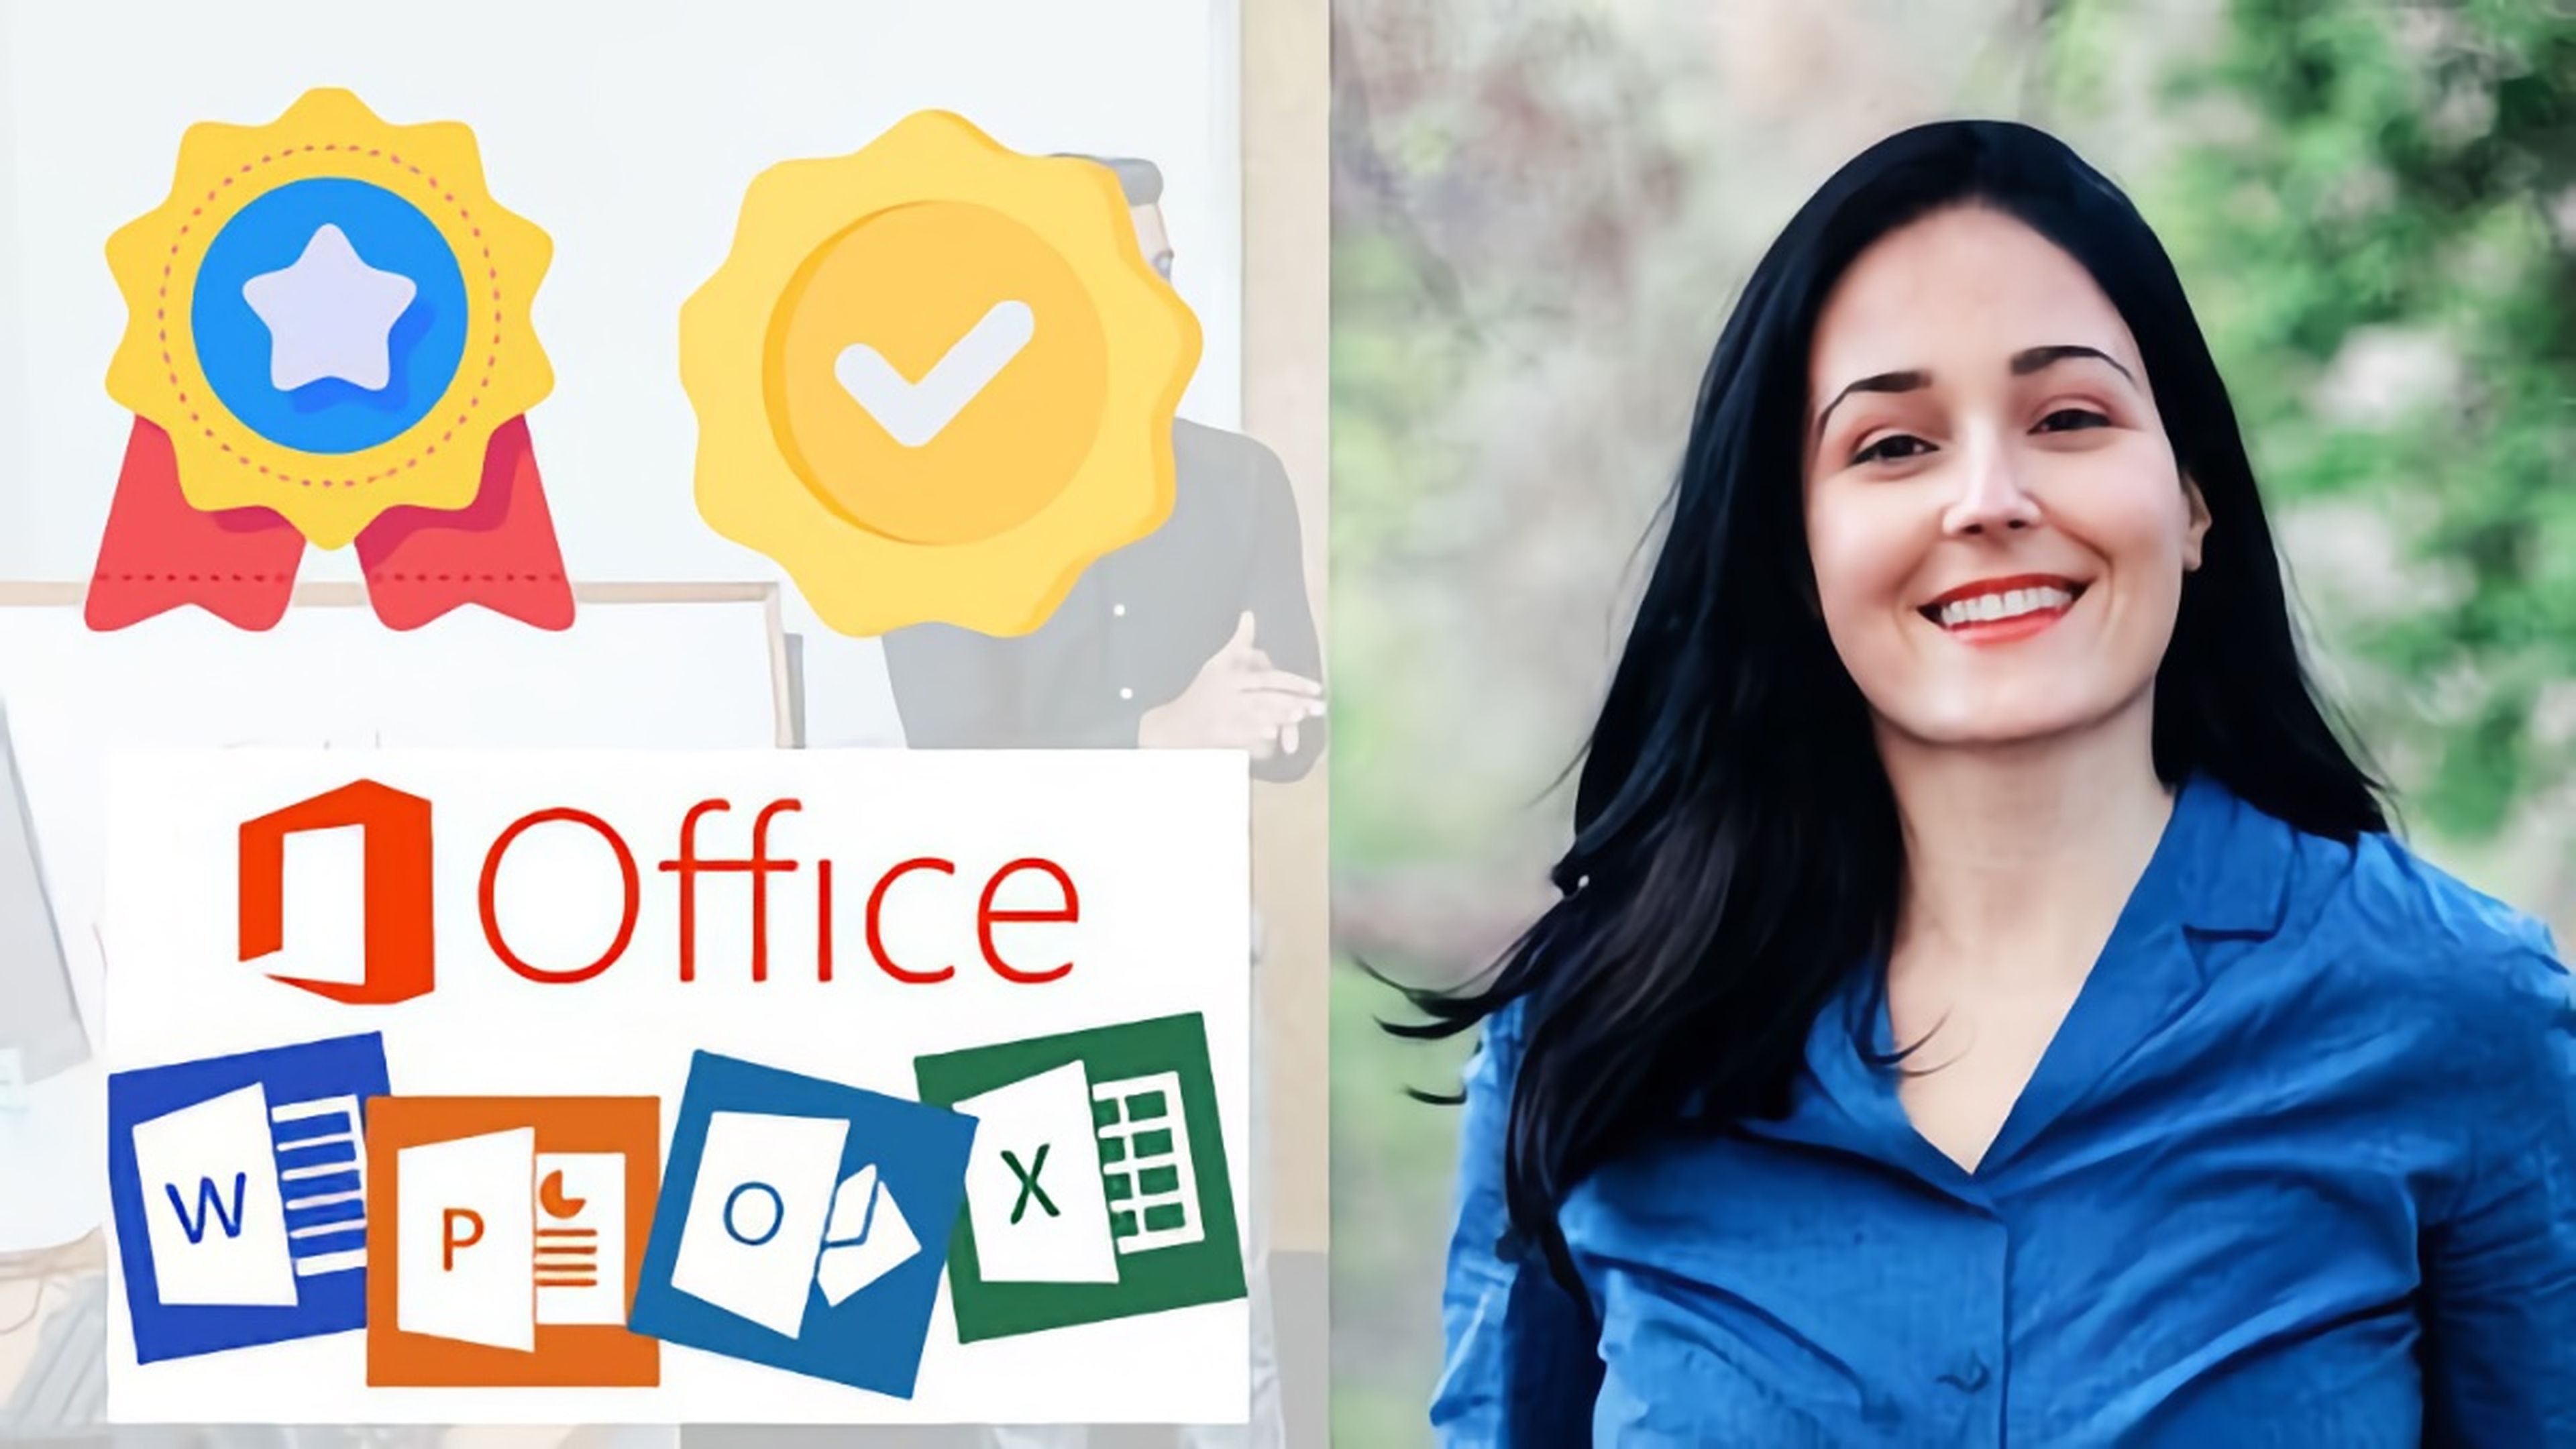 Mejores cursos para aprender a dominar Microsoft Office nivel dios |  Computer Hoy